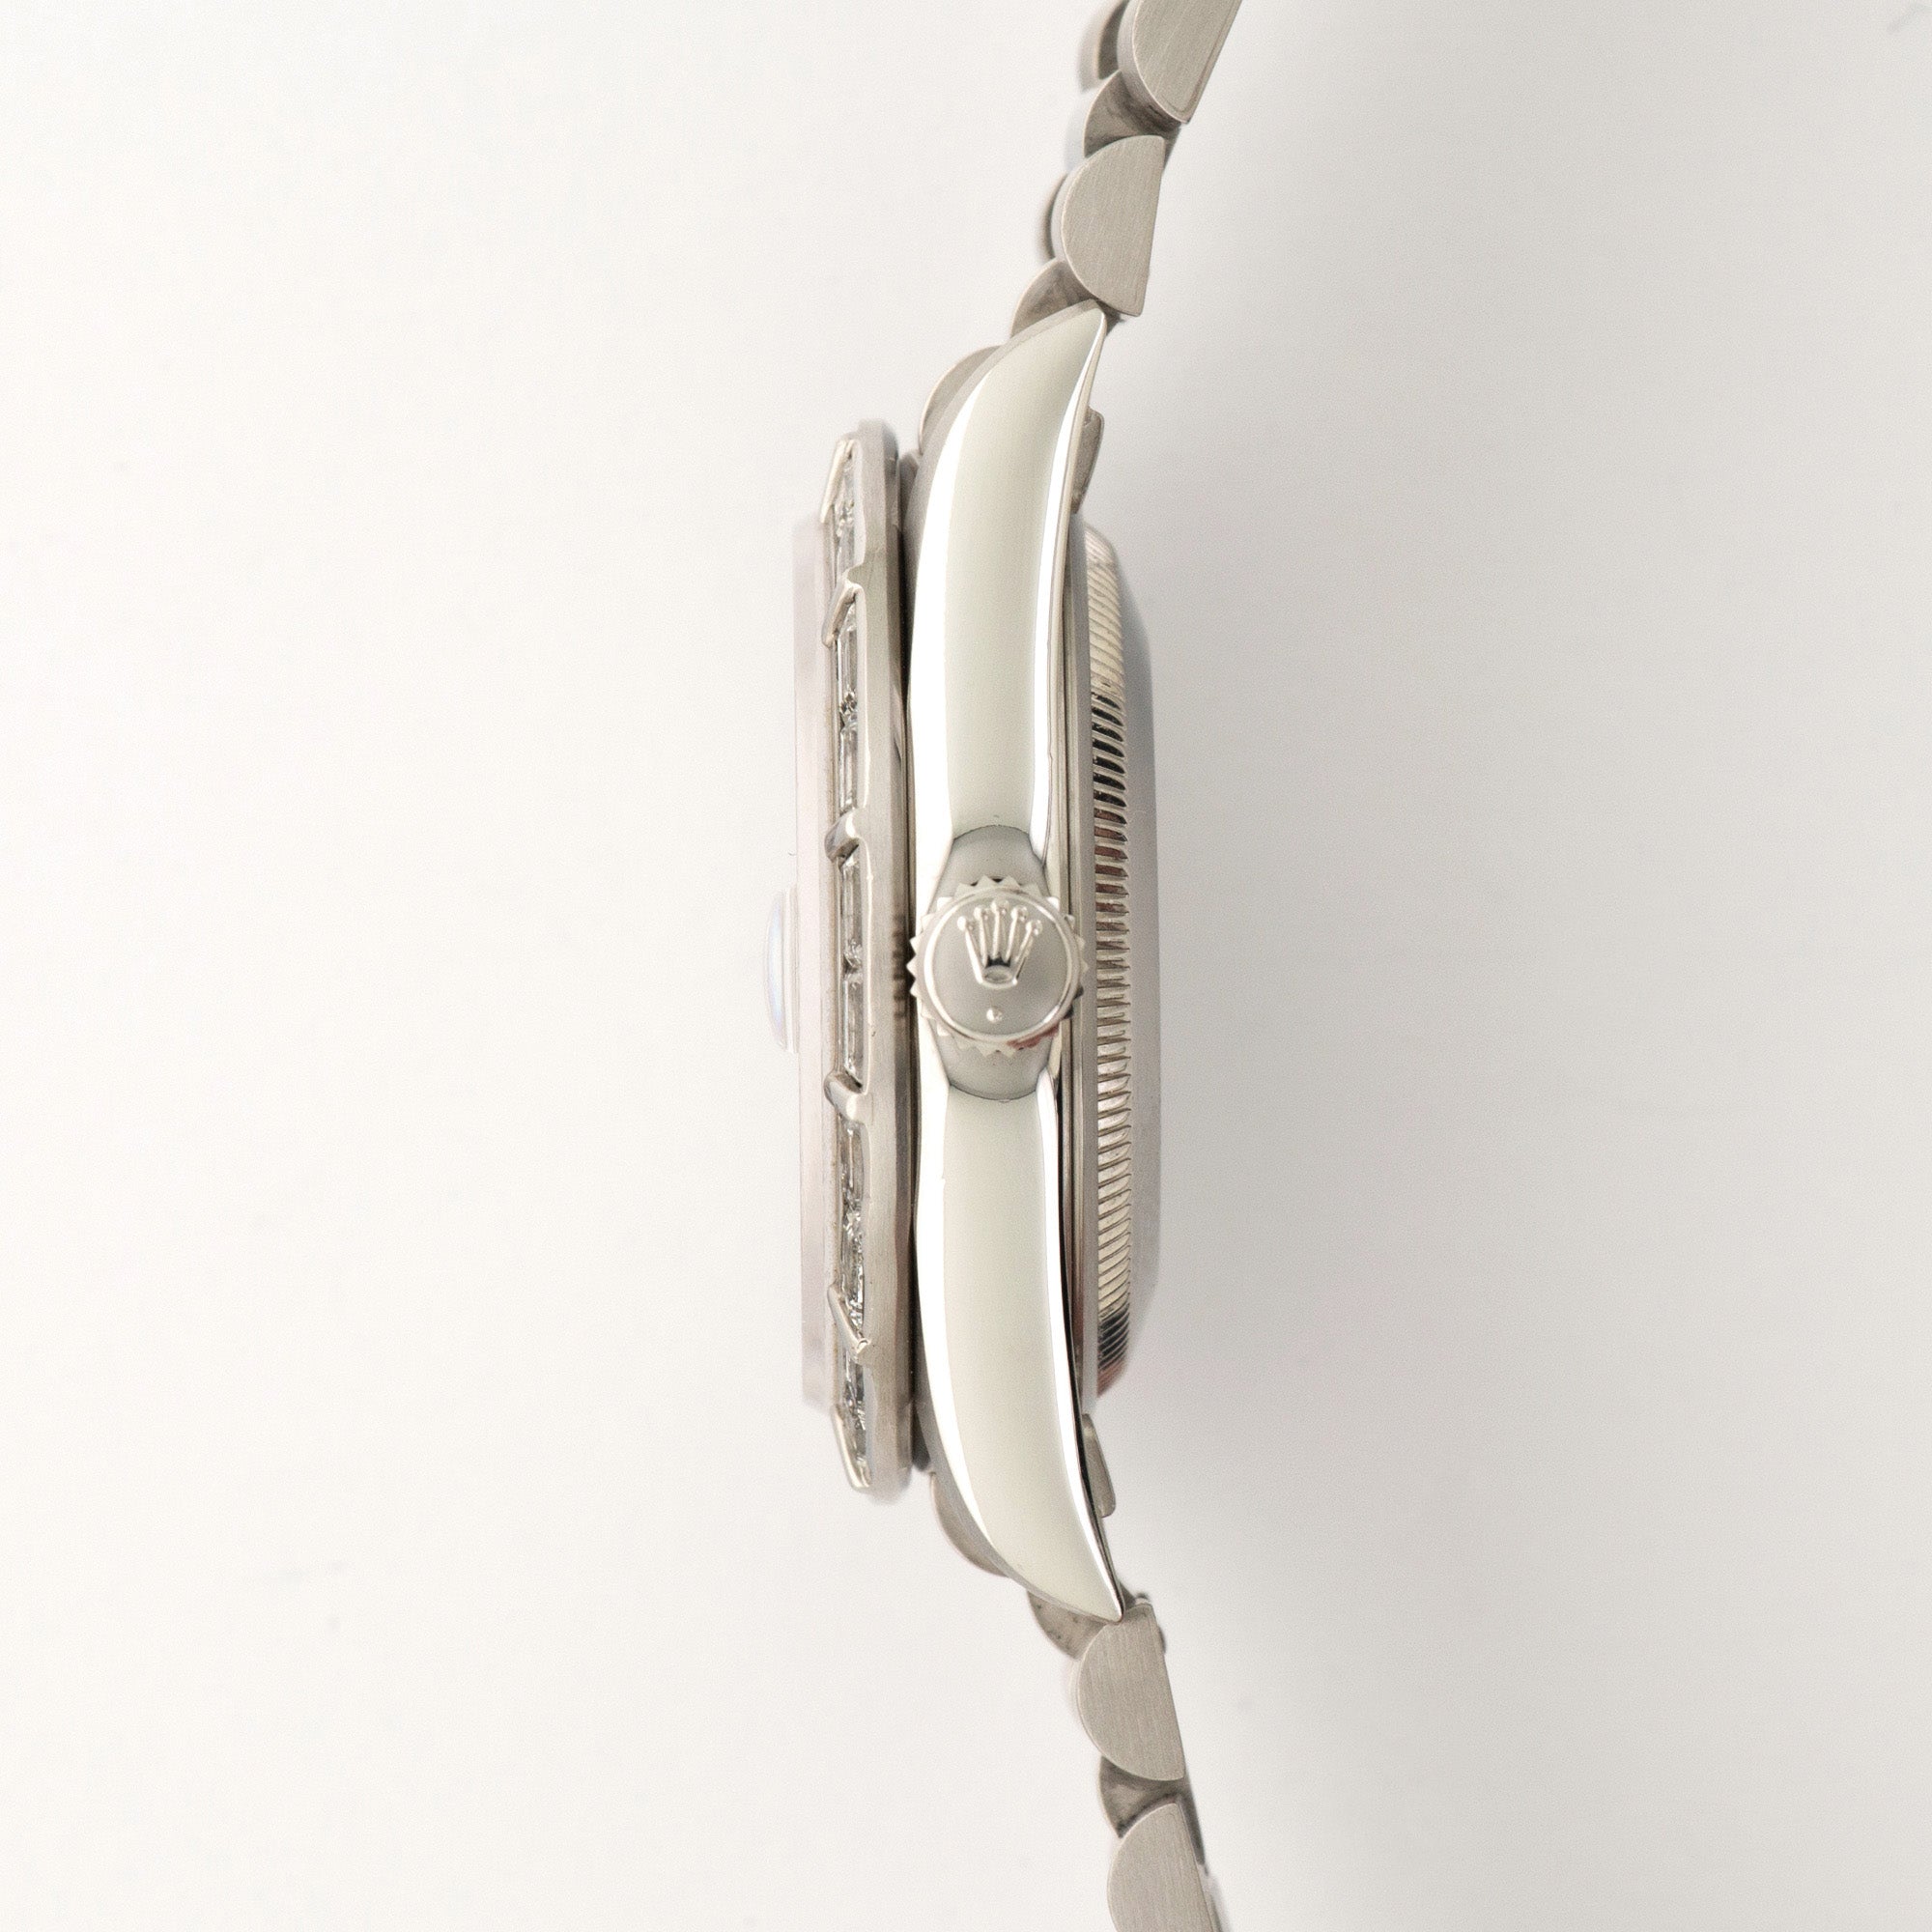 Rolex Platinum Day-Date Baguette Diamond Watch Ref. 18366